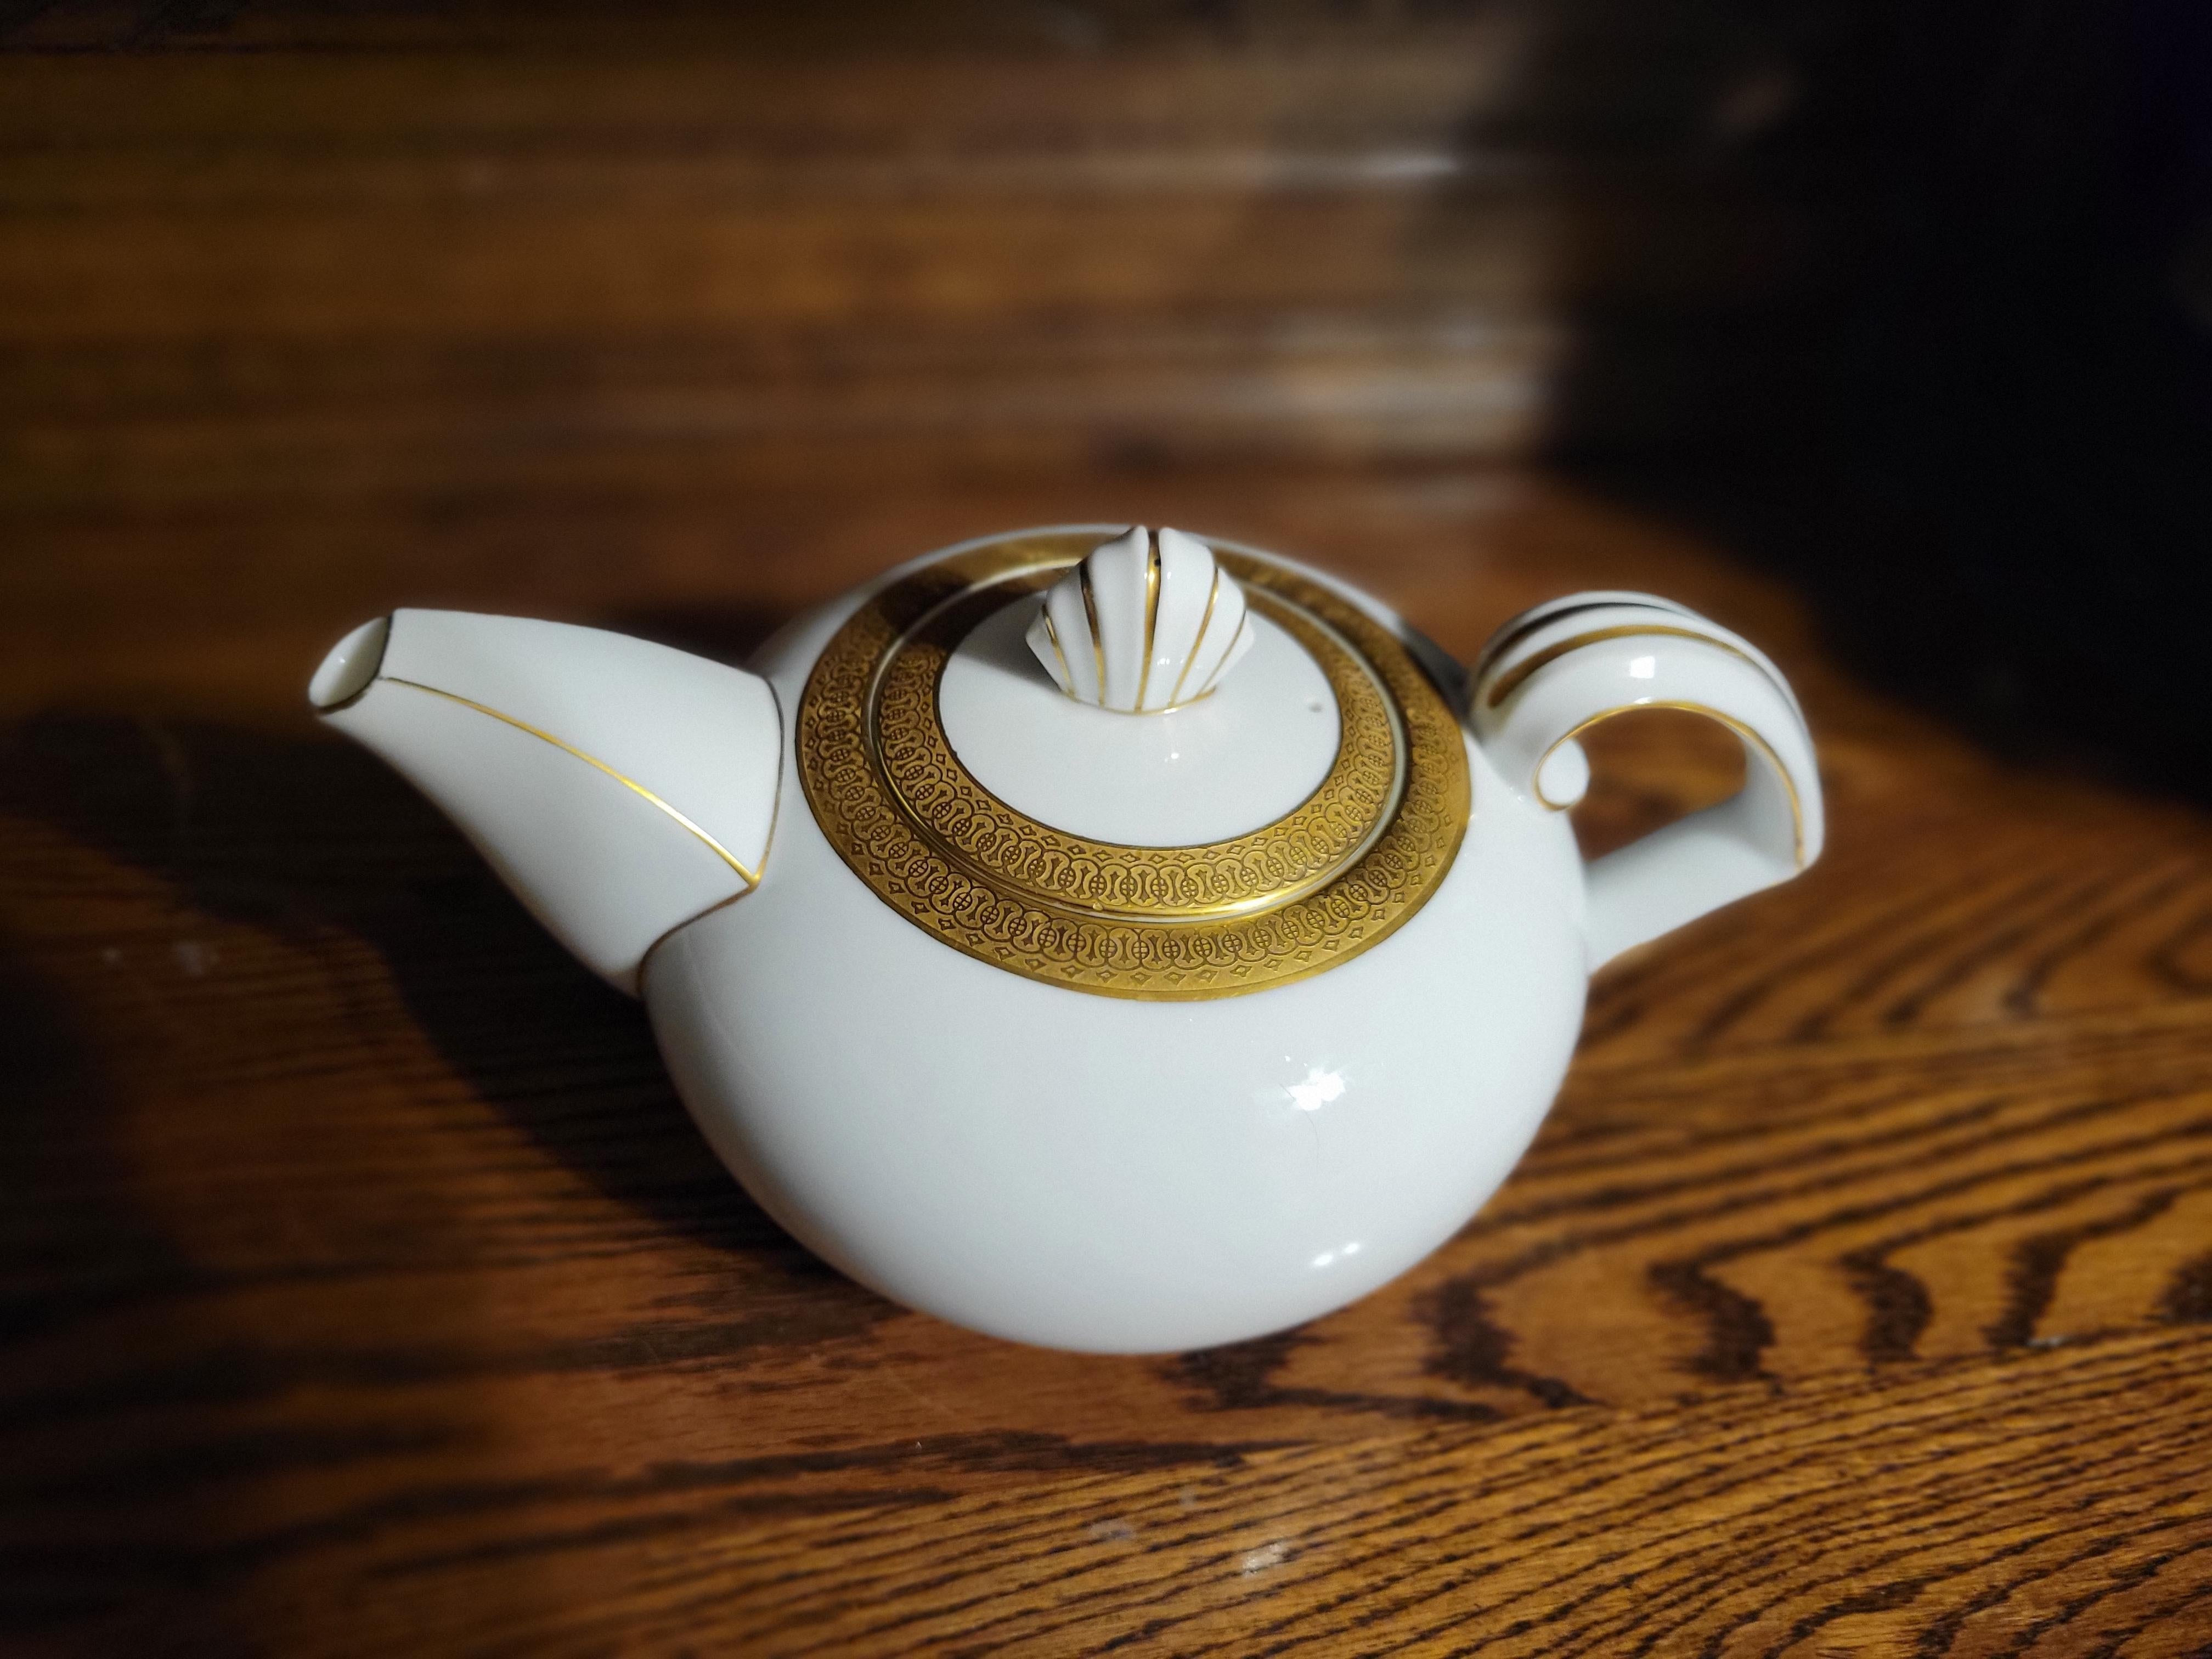 This rare vintage bone china Narumi teapot is about 20